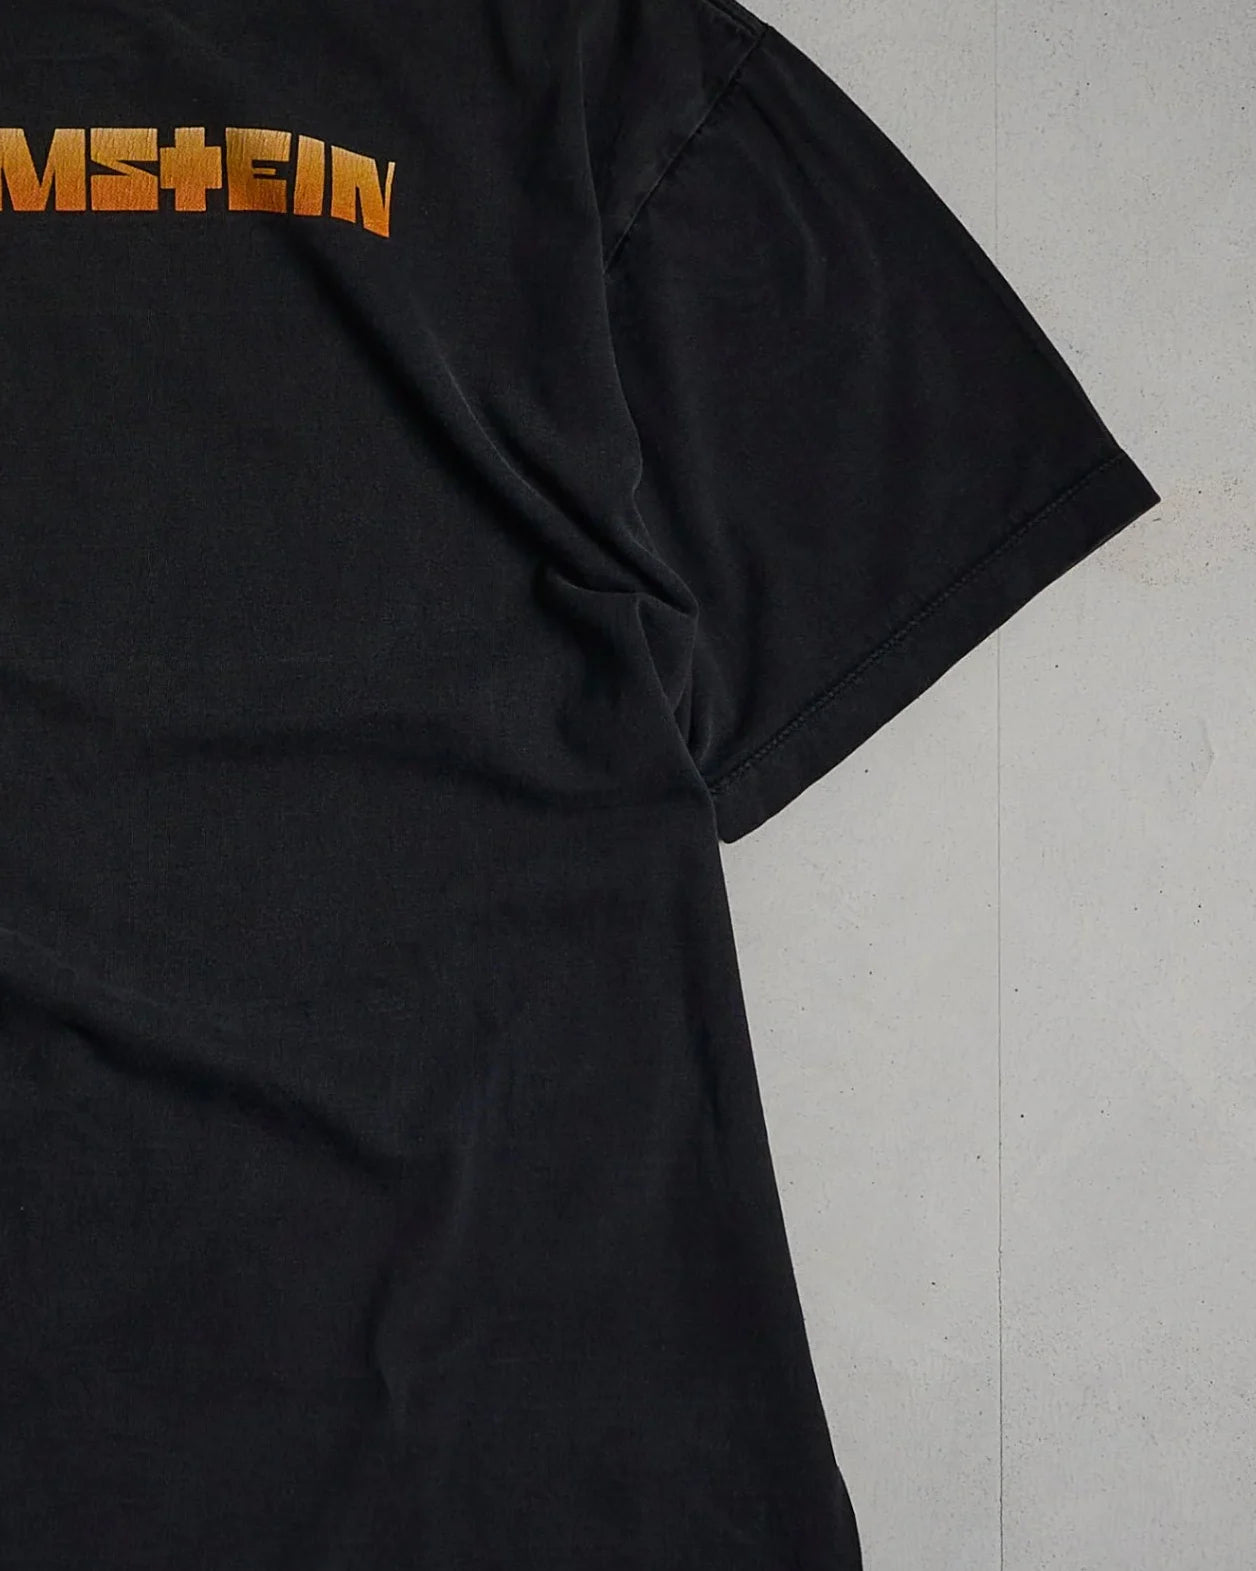 Vintage Rammstein T-Shirt Right